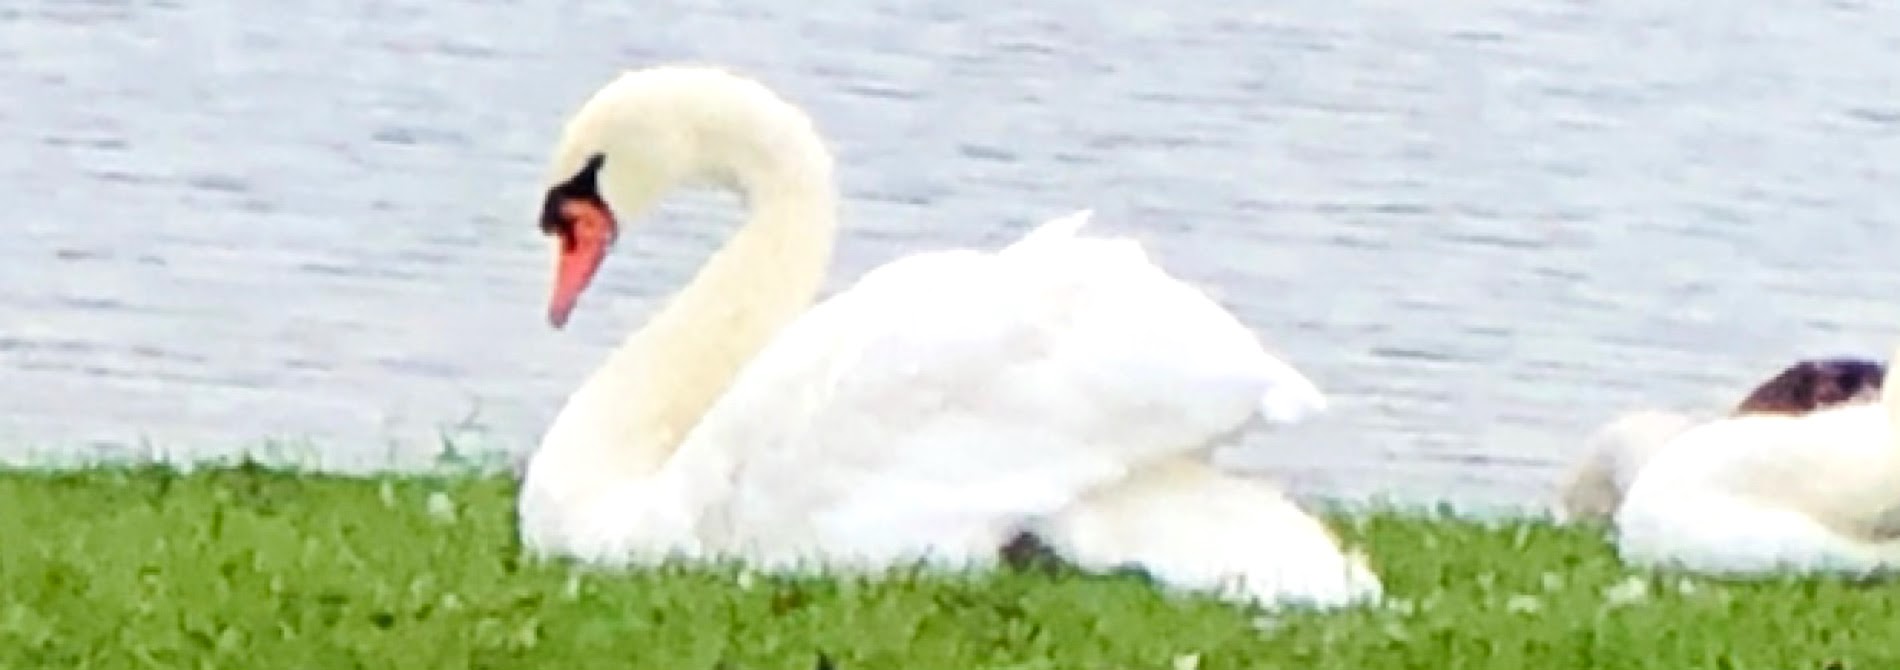 White swan nestled in green grass near water